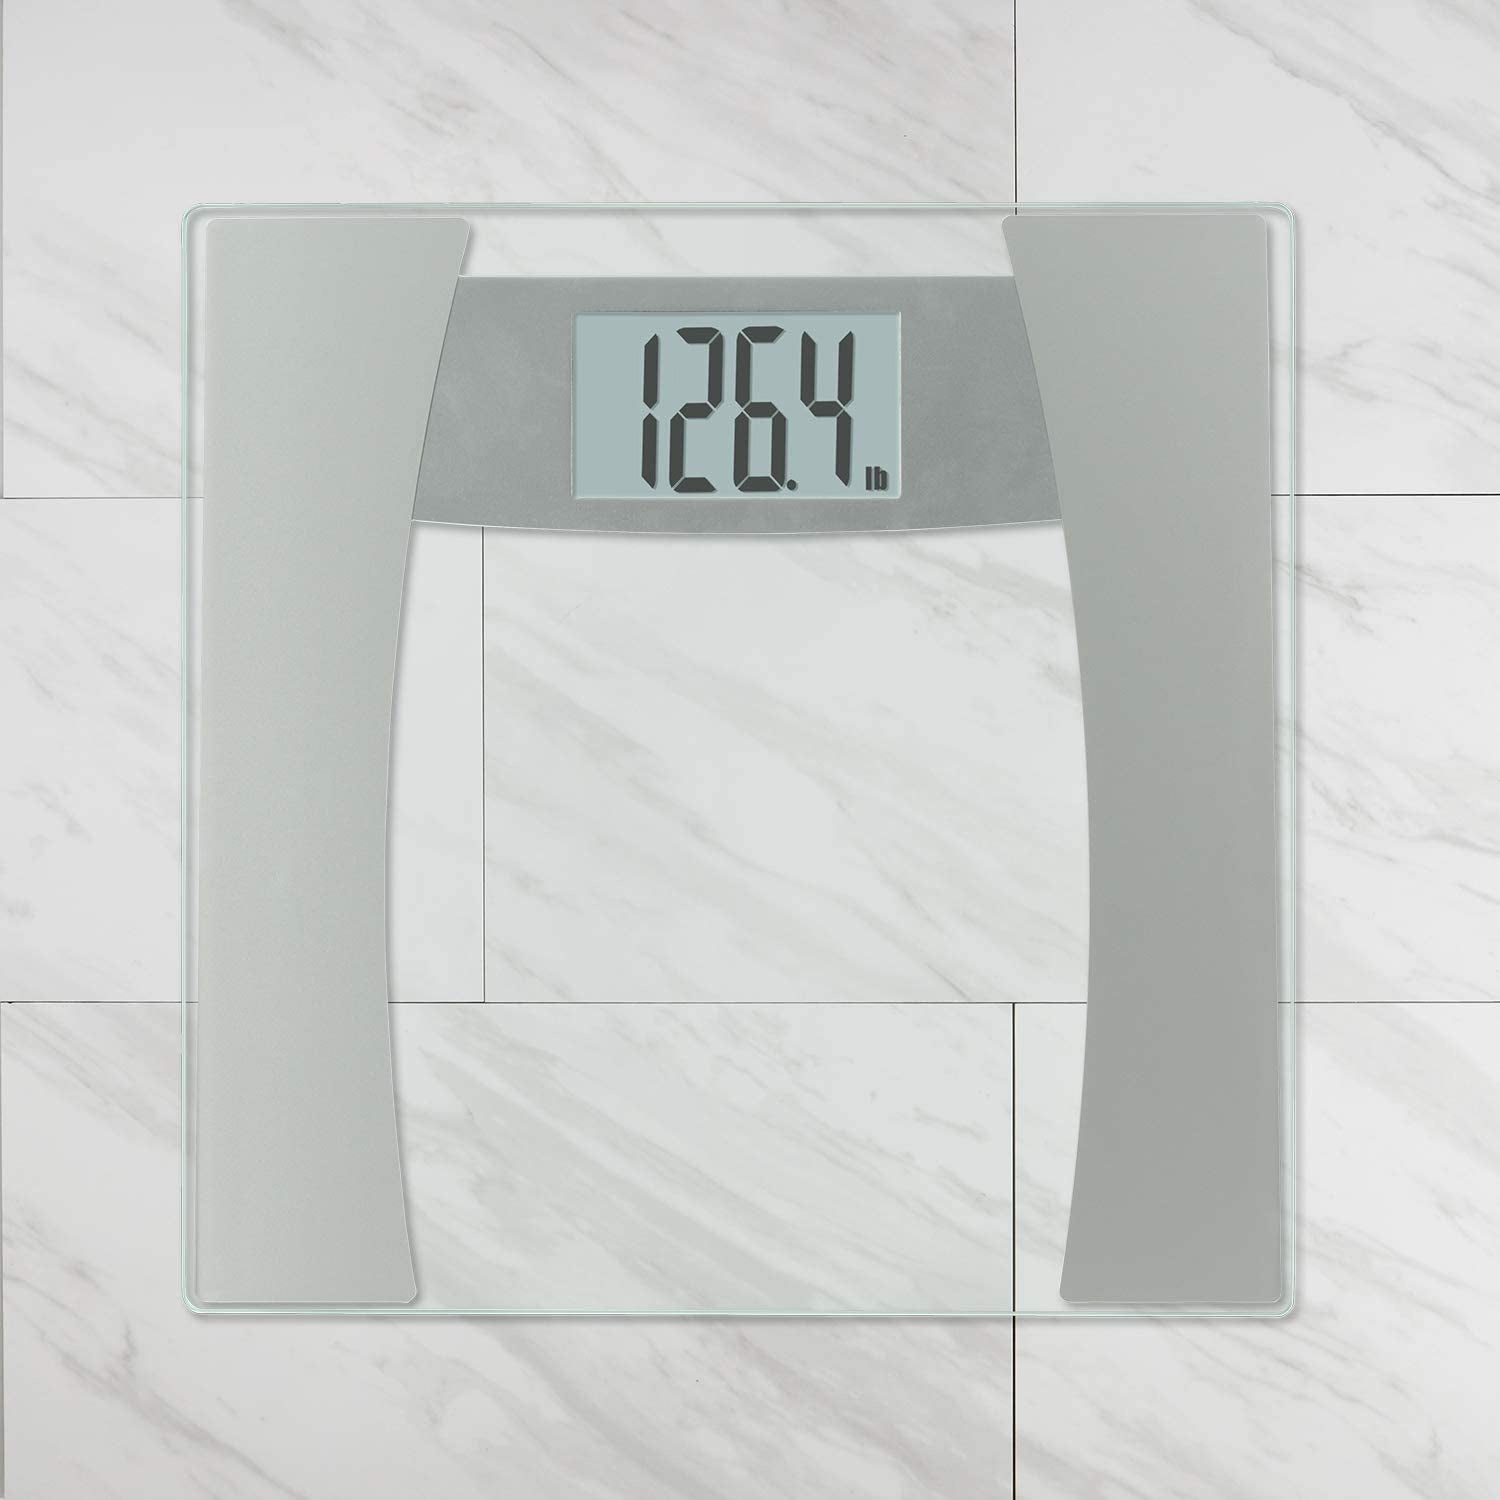 InstaTrack Digital Bathroom Scale, Silver